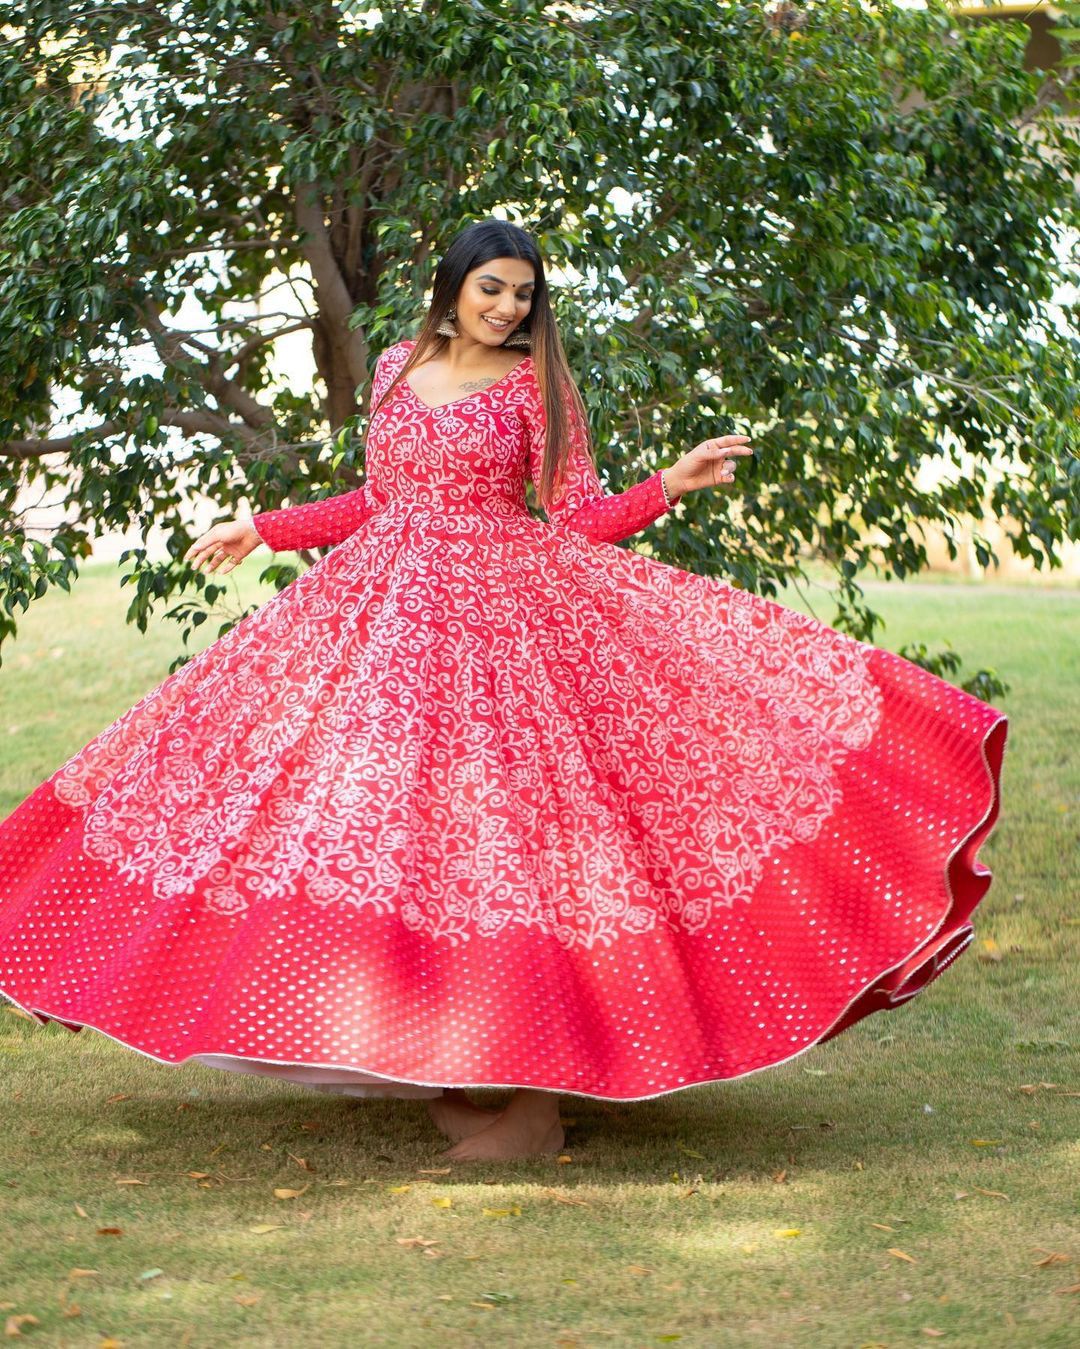 Ravishing Red Gowns For Brides Looking To Step-Up Their Wedding Wardrobe! |  WeddingBazaar